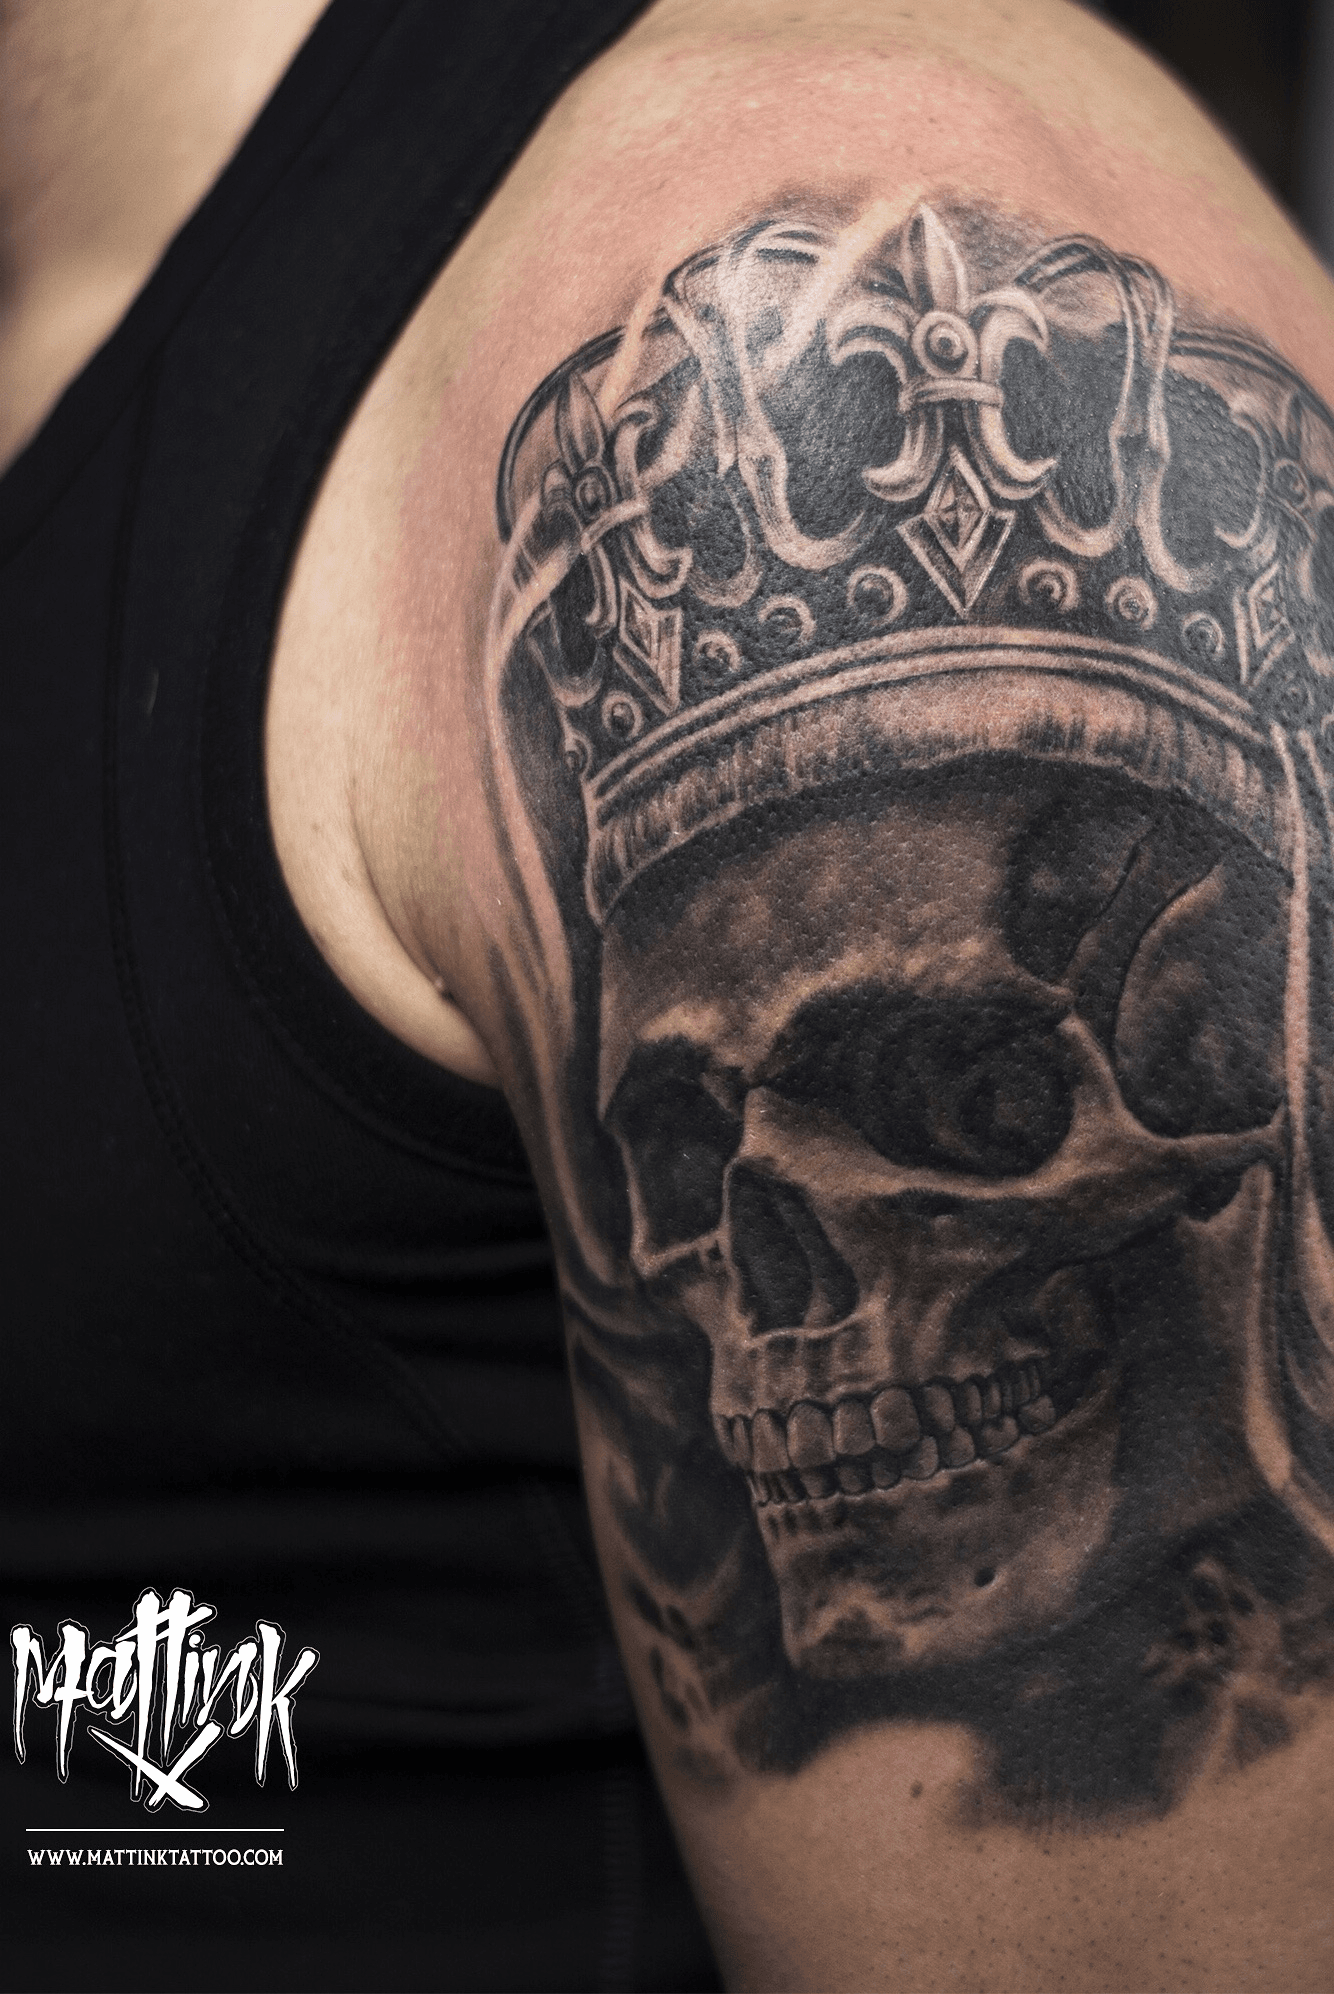 Skull Tattoo Crown Images  Free Download on Freepik